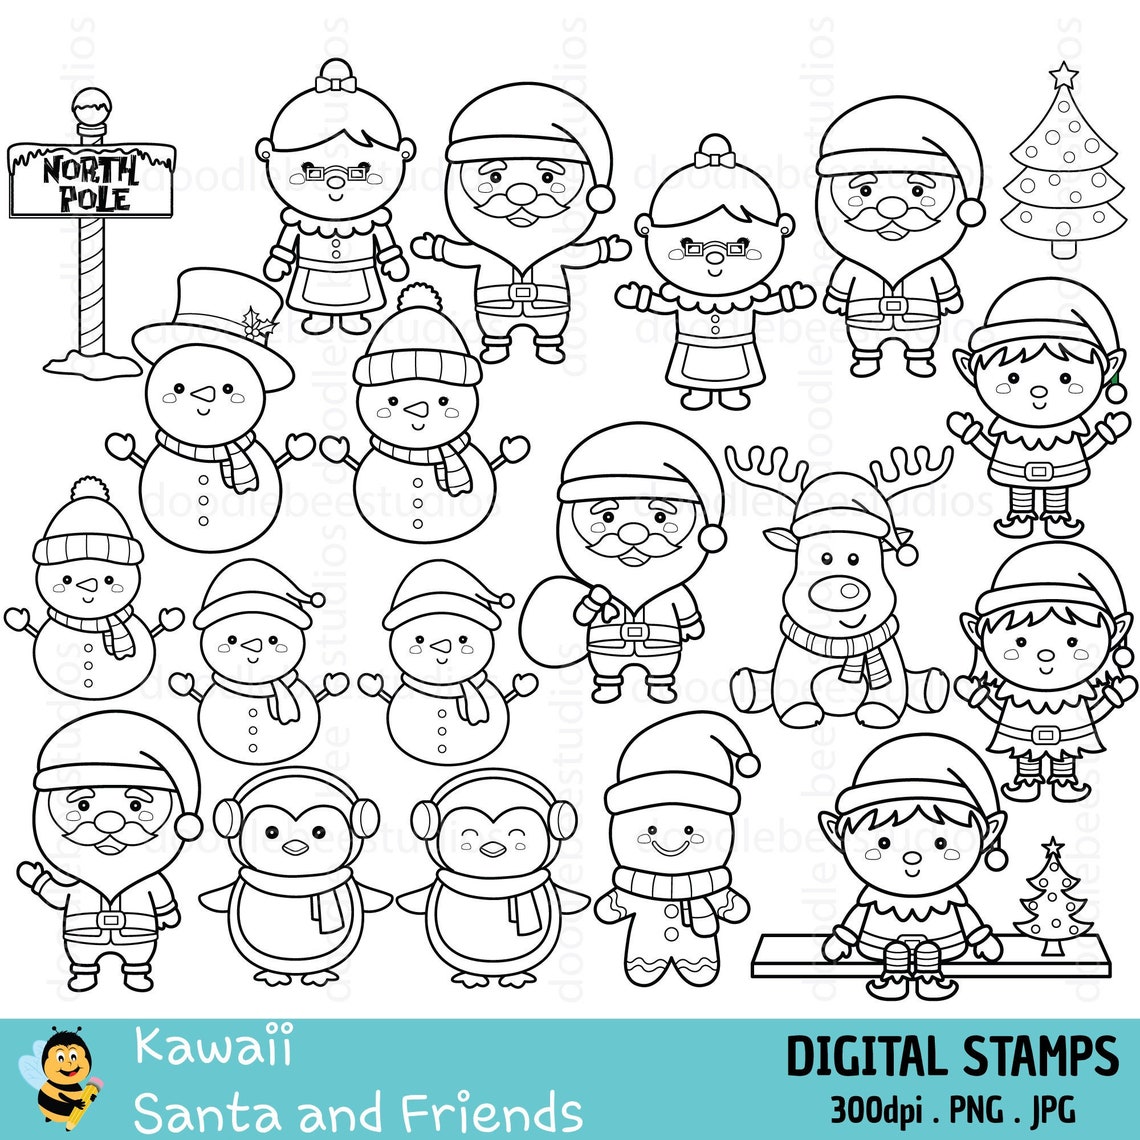 Kawaii Christmas Digital Stamps Cute Christmas Digital - Etsy